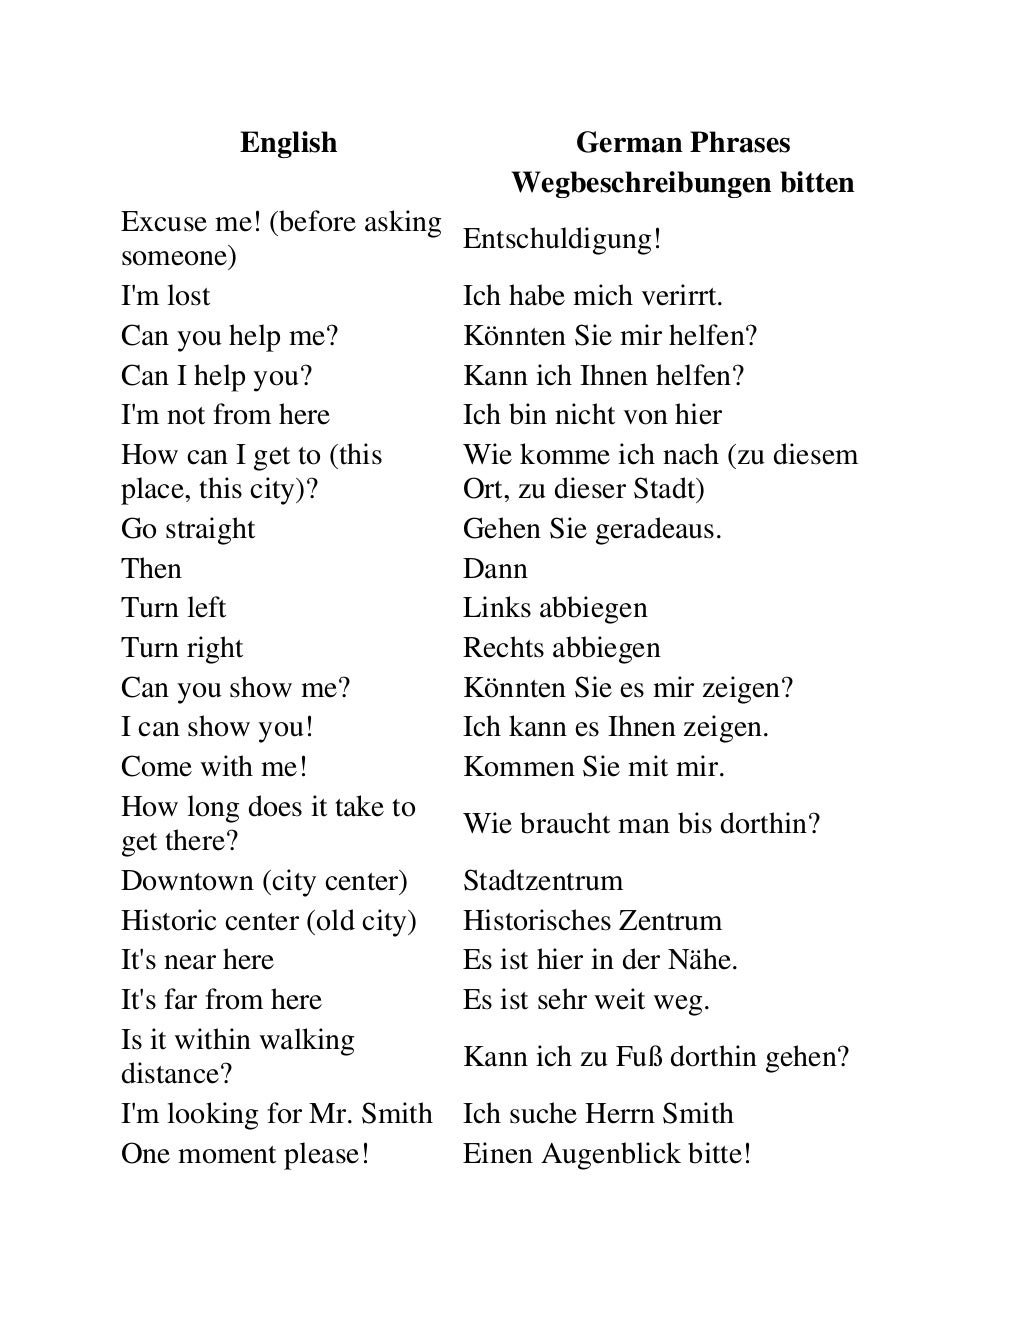 german-phrases